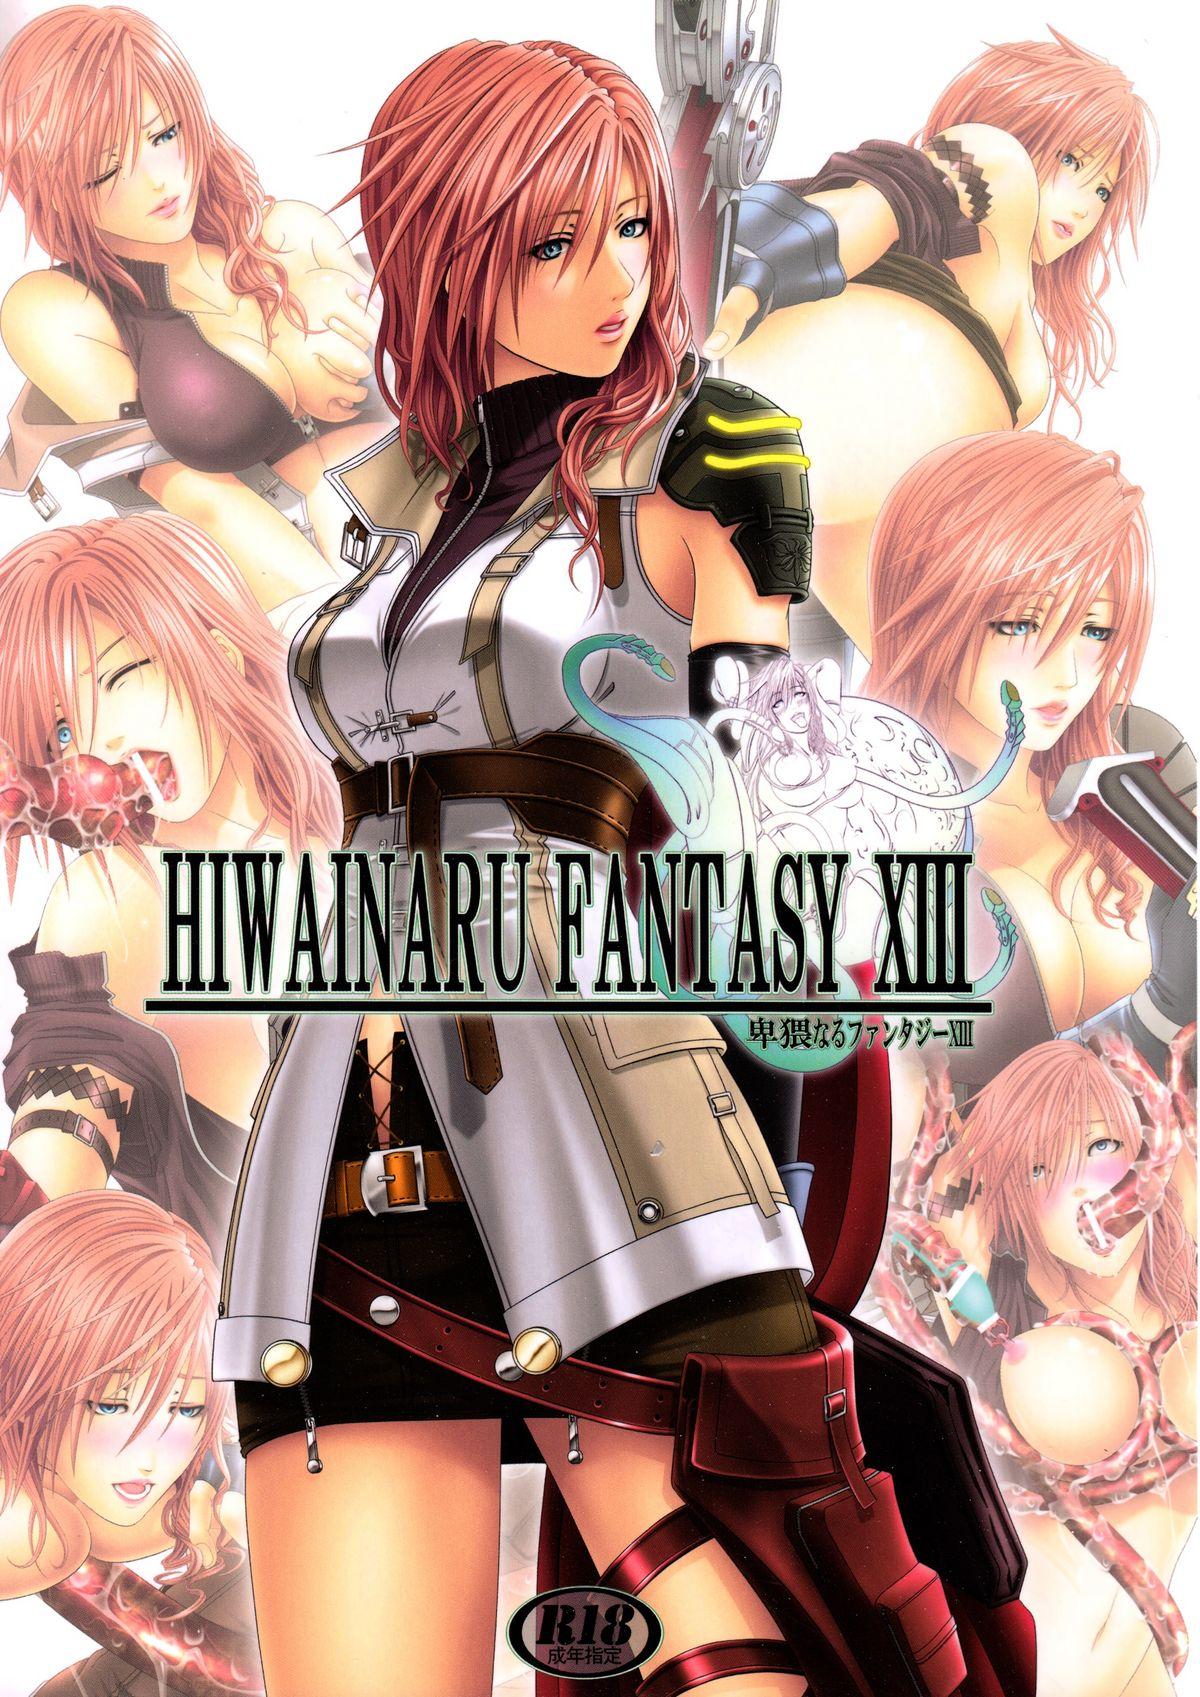 Strap On HIWAINARU FANTASY XIII - Final fantasy xiii Gilf - Picture 1